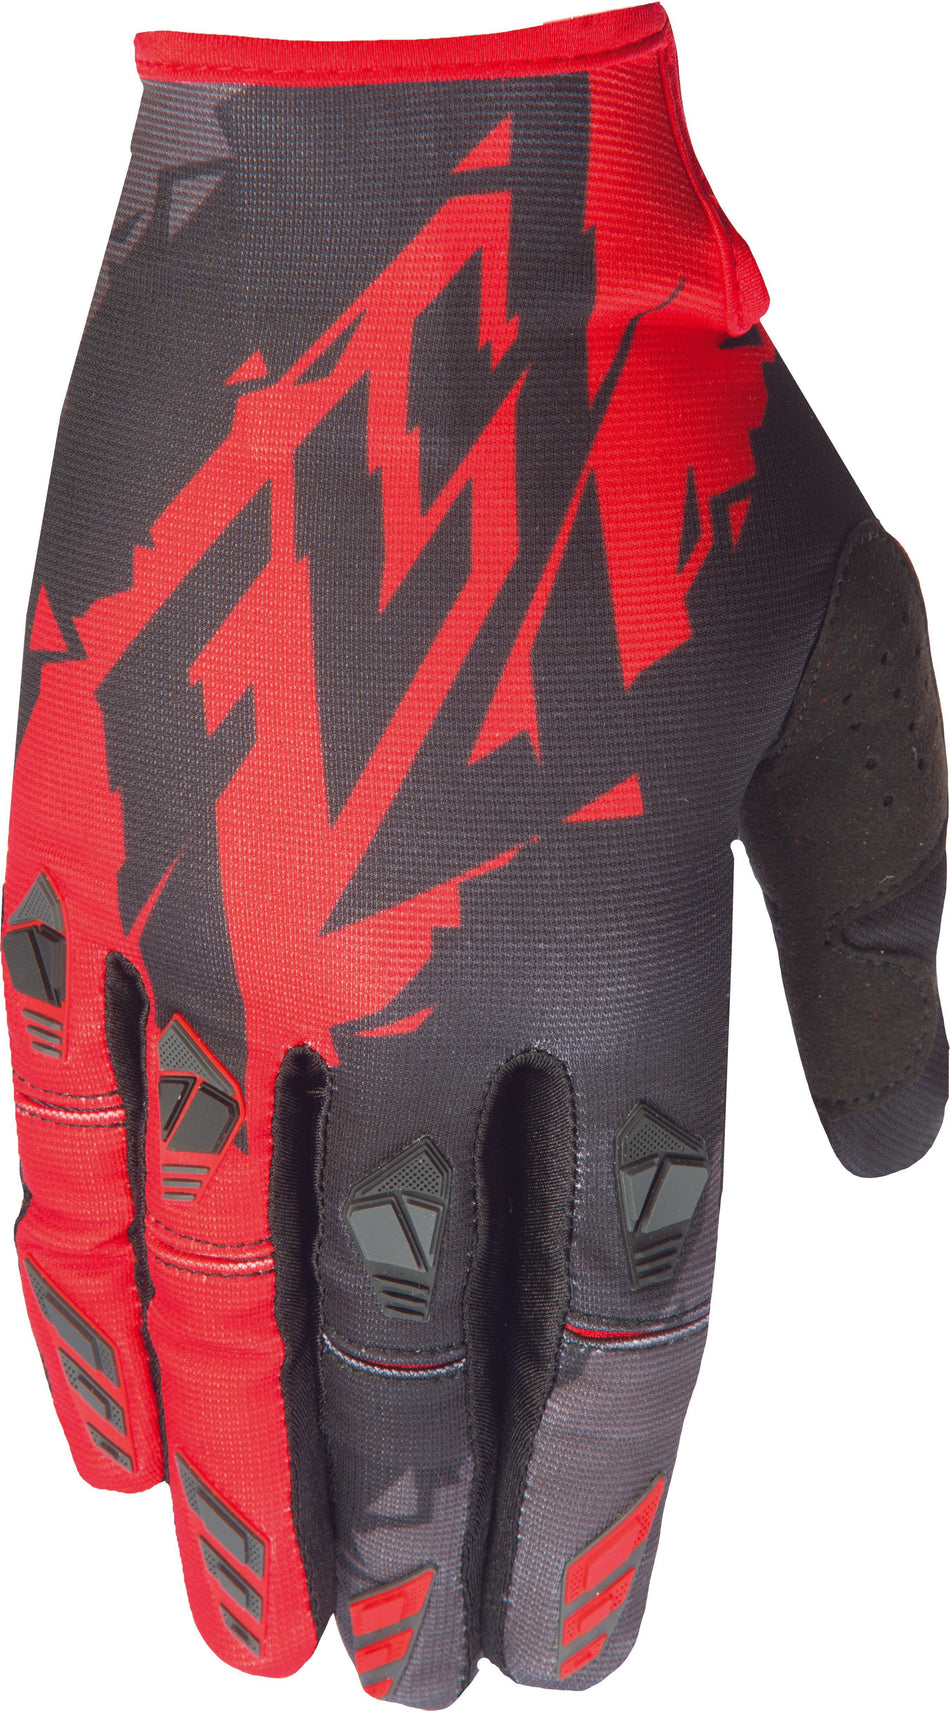 FLY RACING Kinetic Glove Black/Red Sz 5 Ym 370-41205